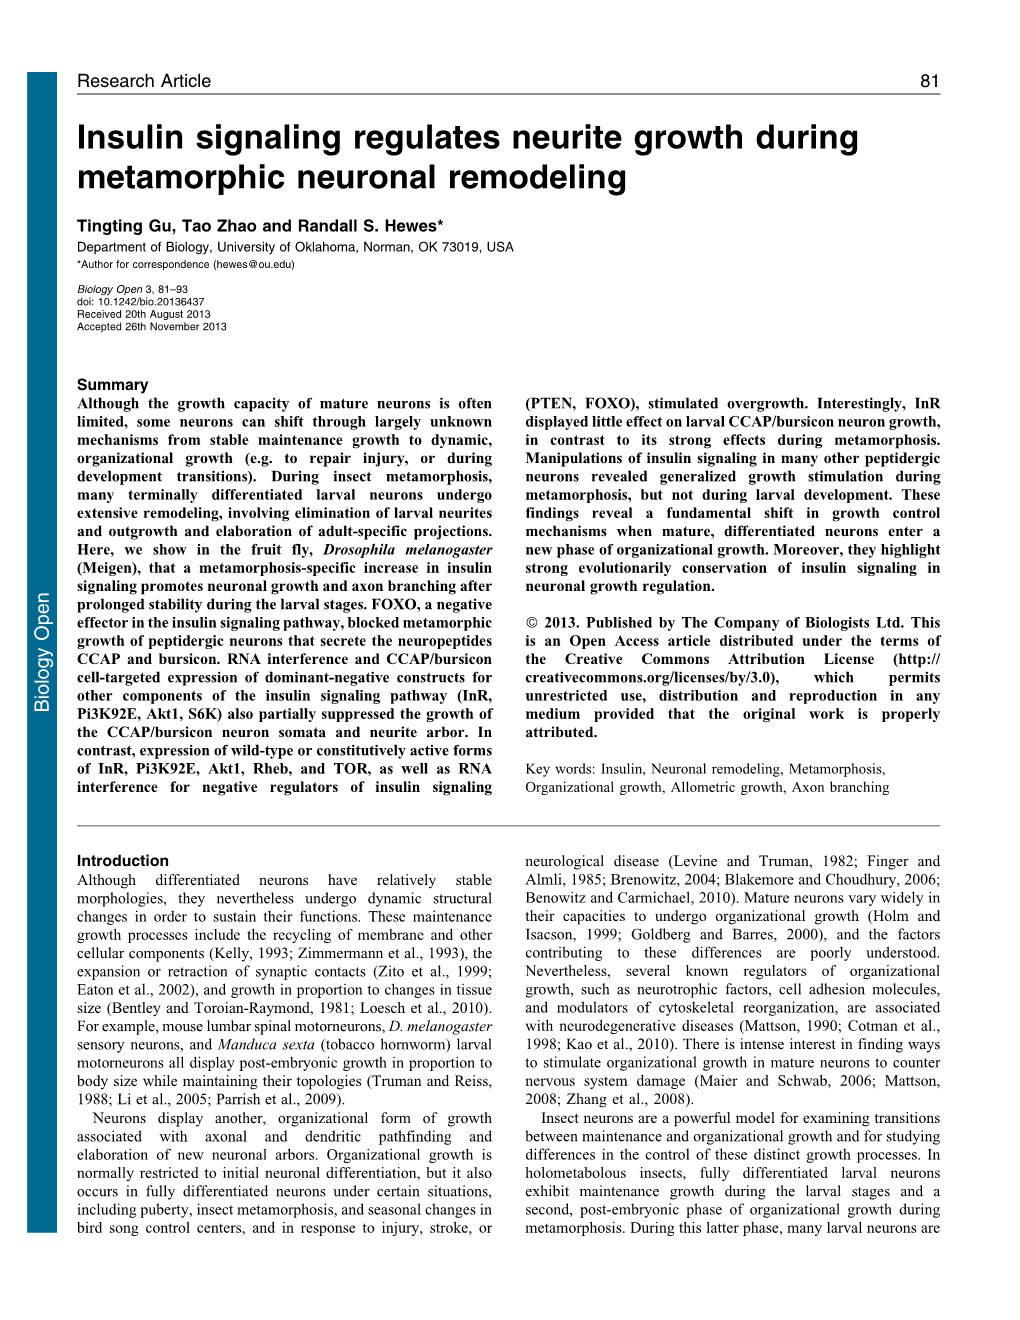 Insulin Signaling Regulates Neurite Growth During Metamorphic Neuronal Remodeling